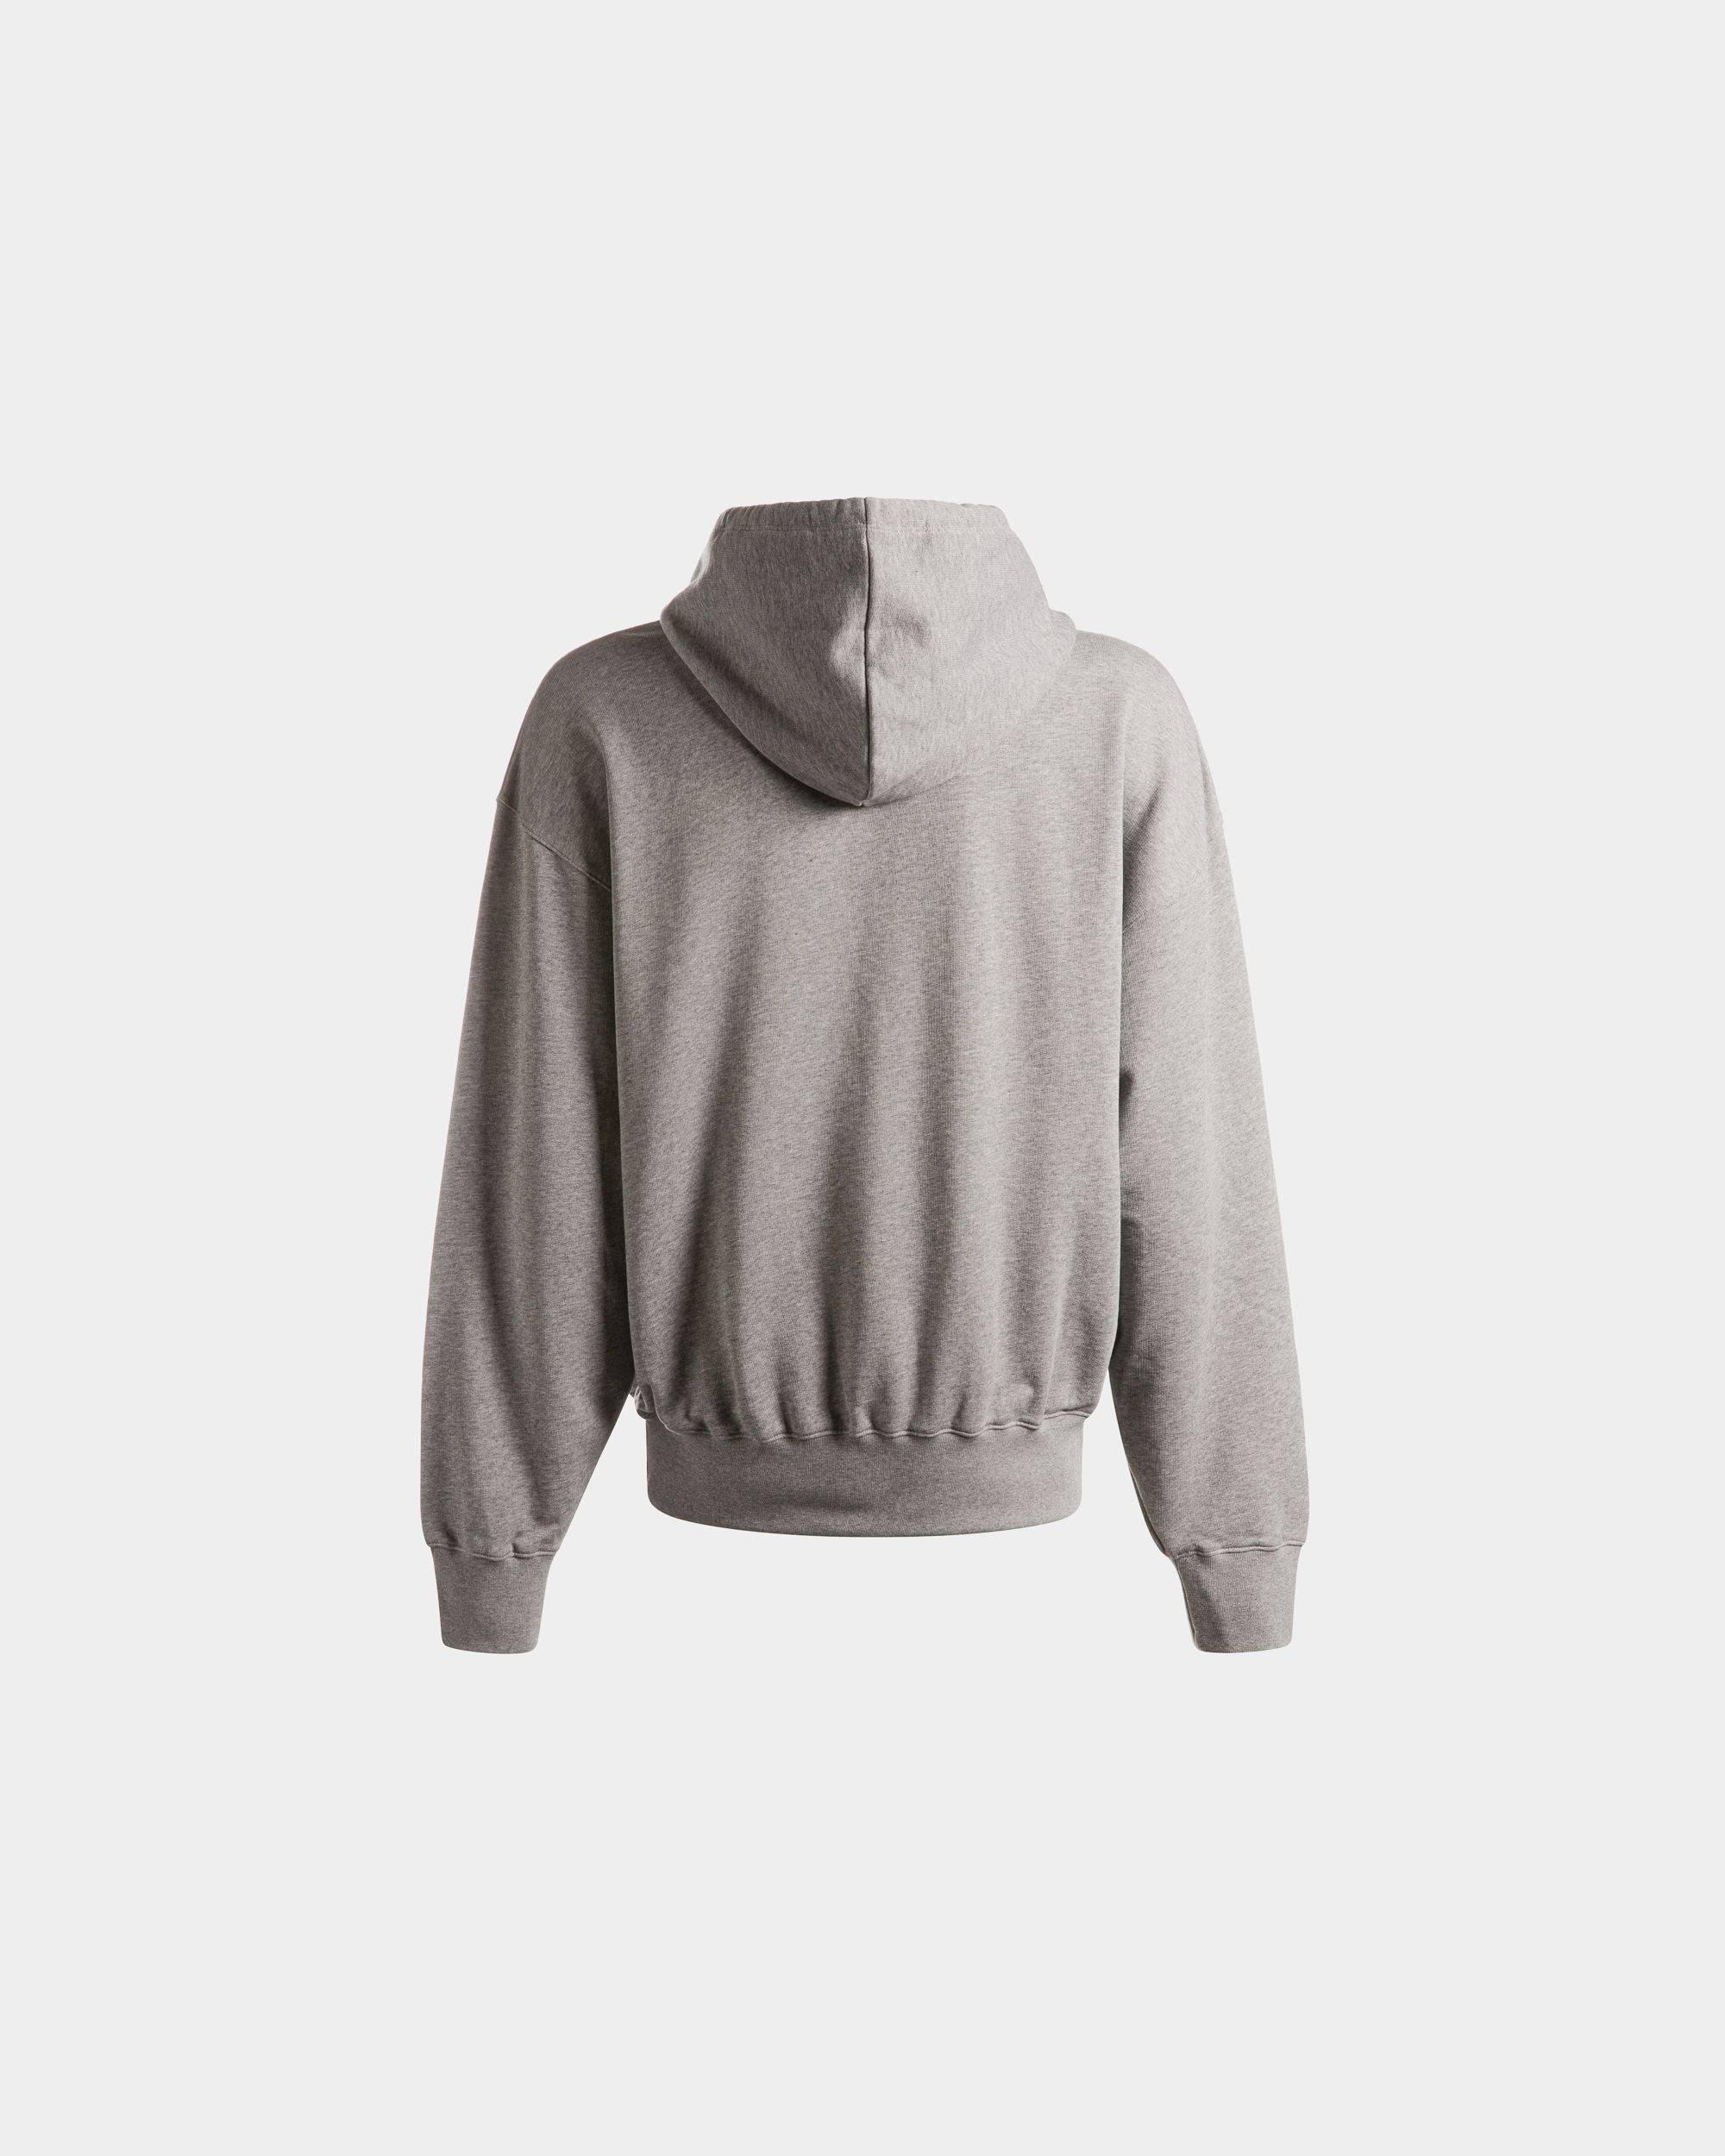 Men's Sweatshirt in Grey Melange Cotton | Bally | Still Life Back